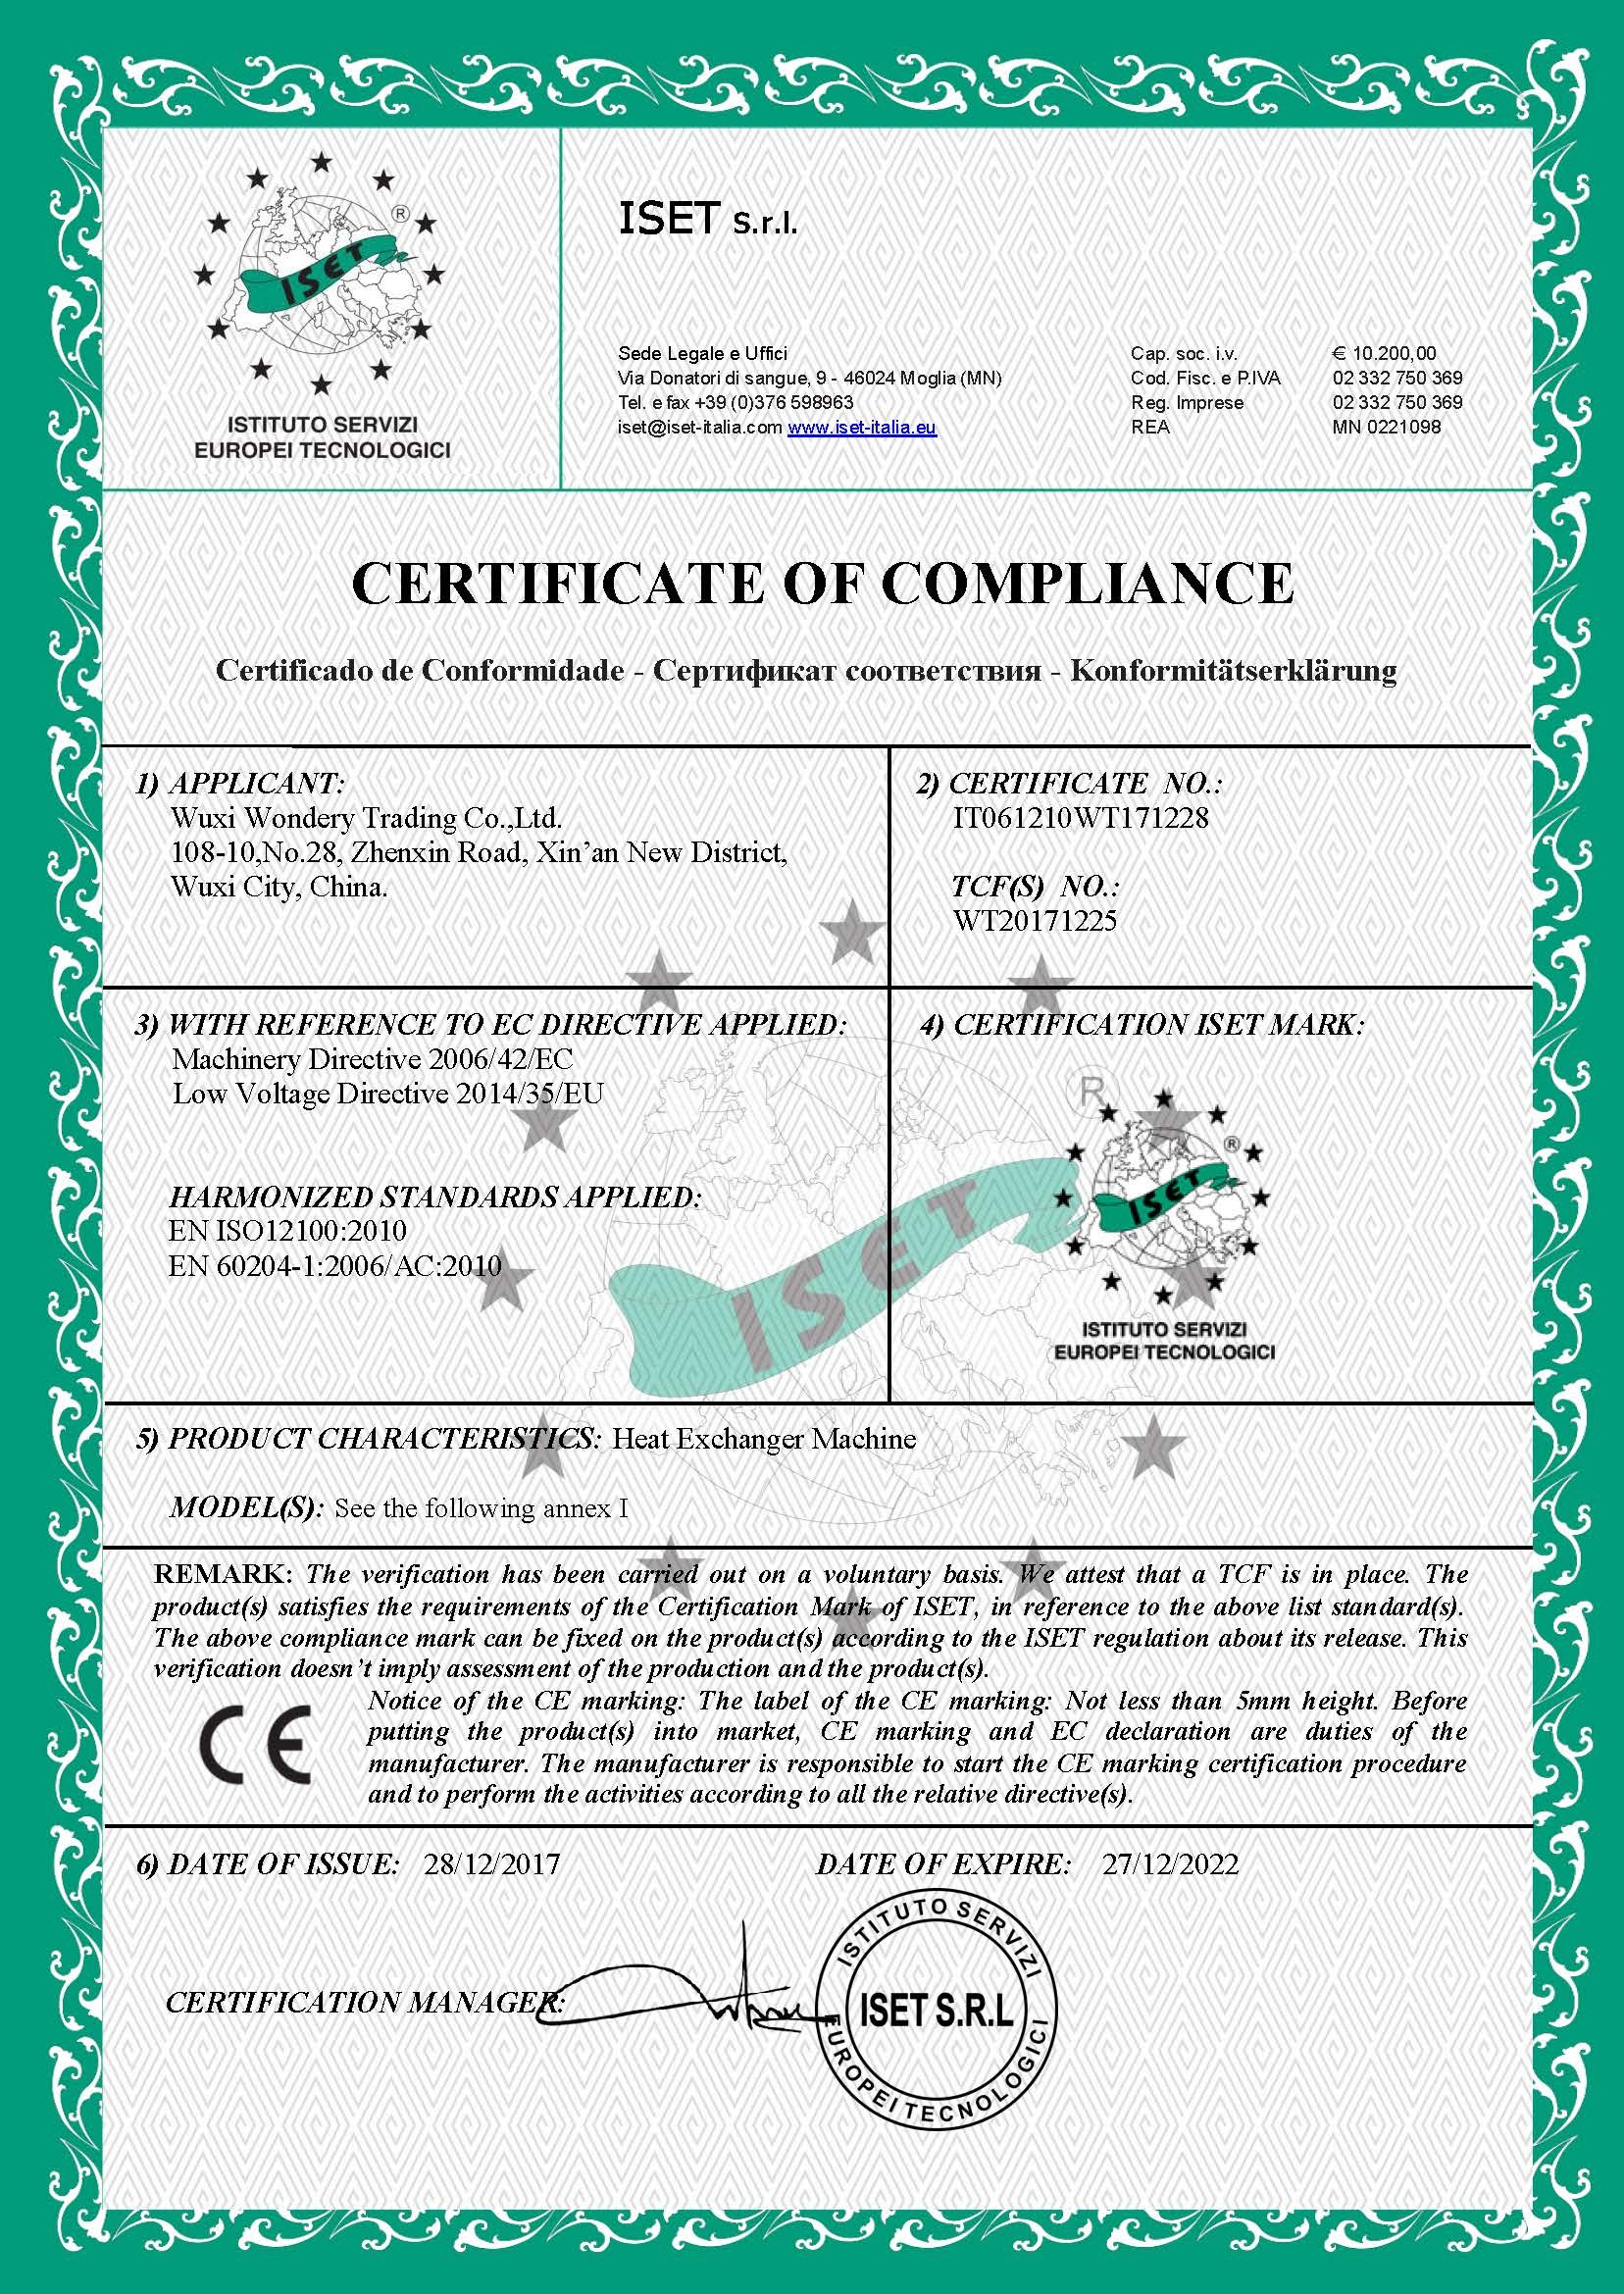 La Chine Wuxi Wondery Industry Equipment Co., Ltd Certifications